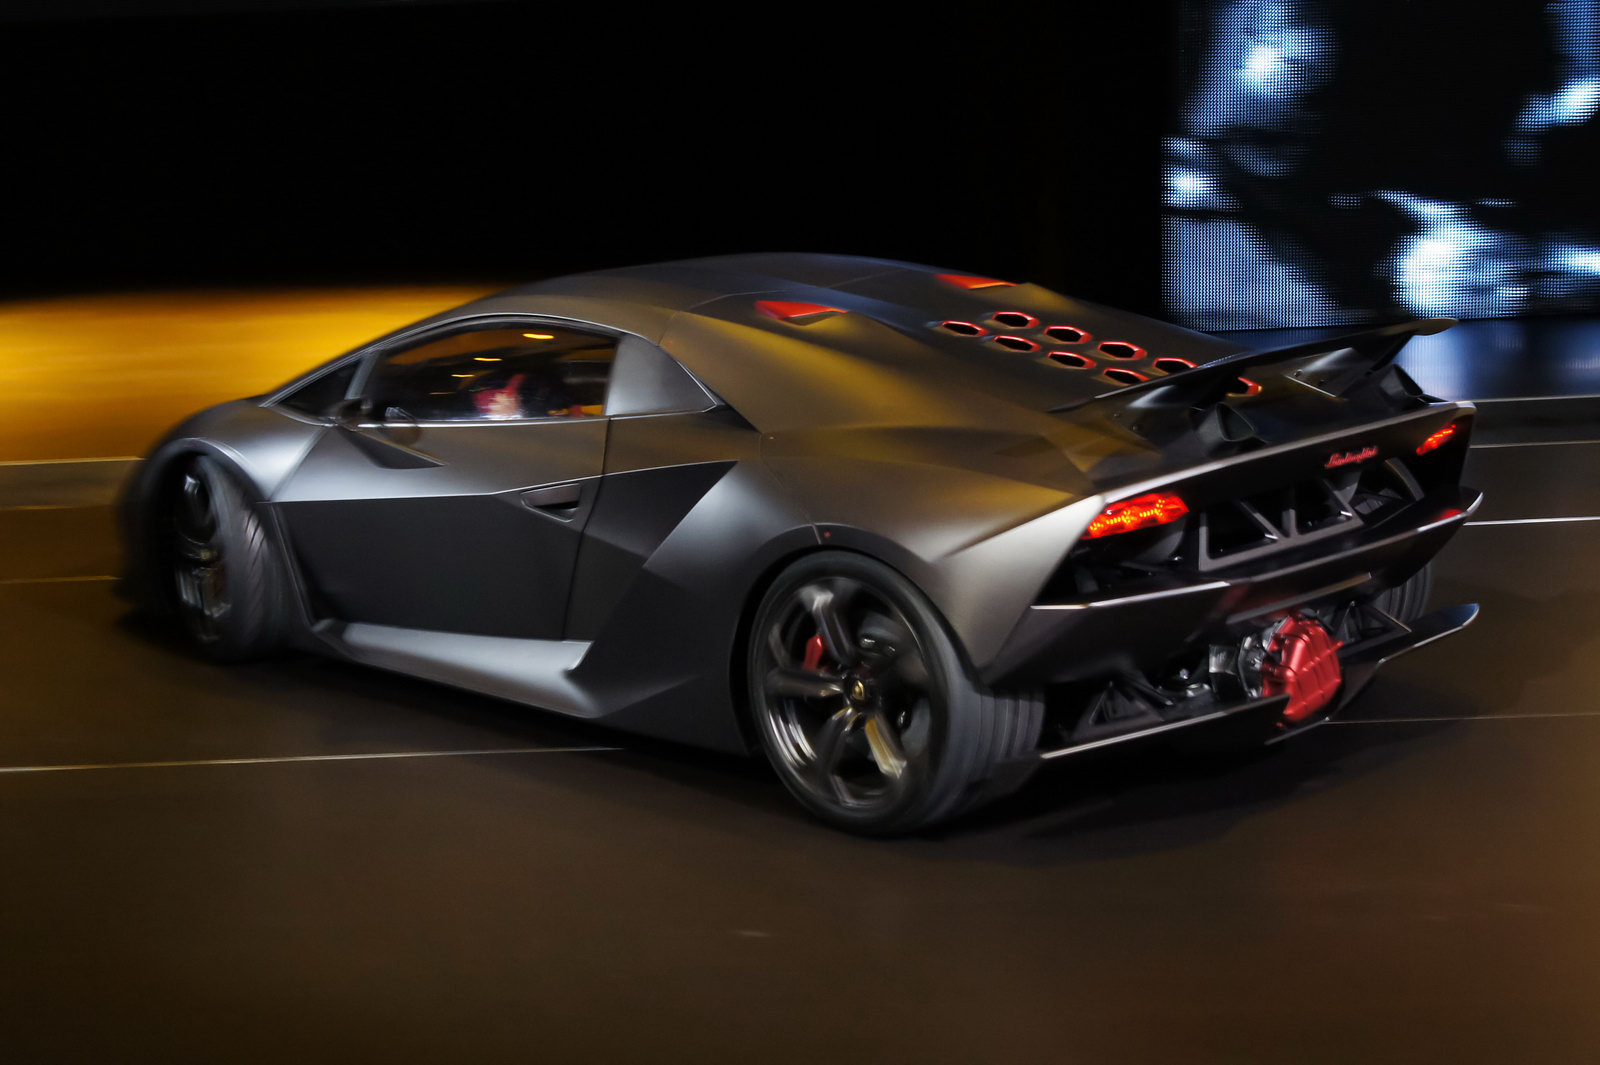 Lamborghini Sesto Elemento Wallpapers